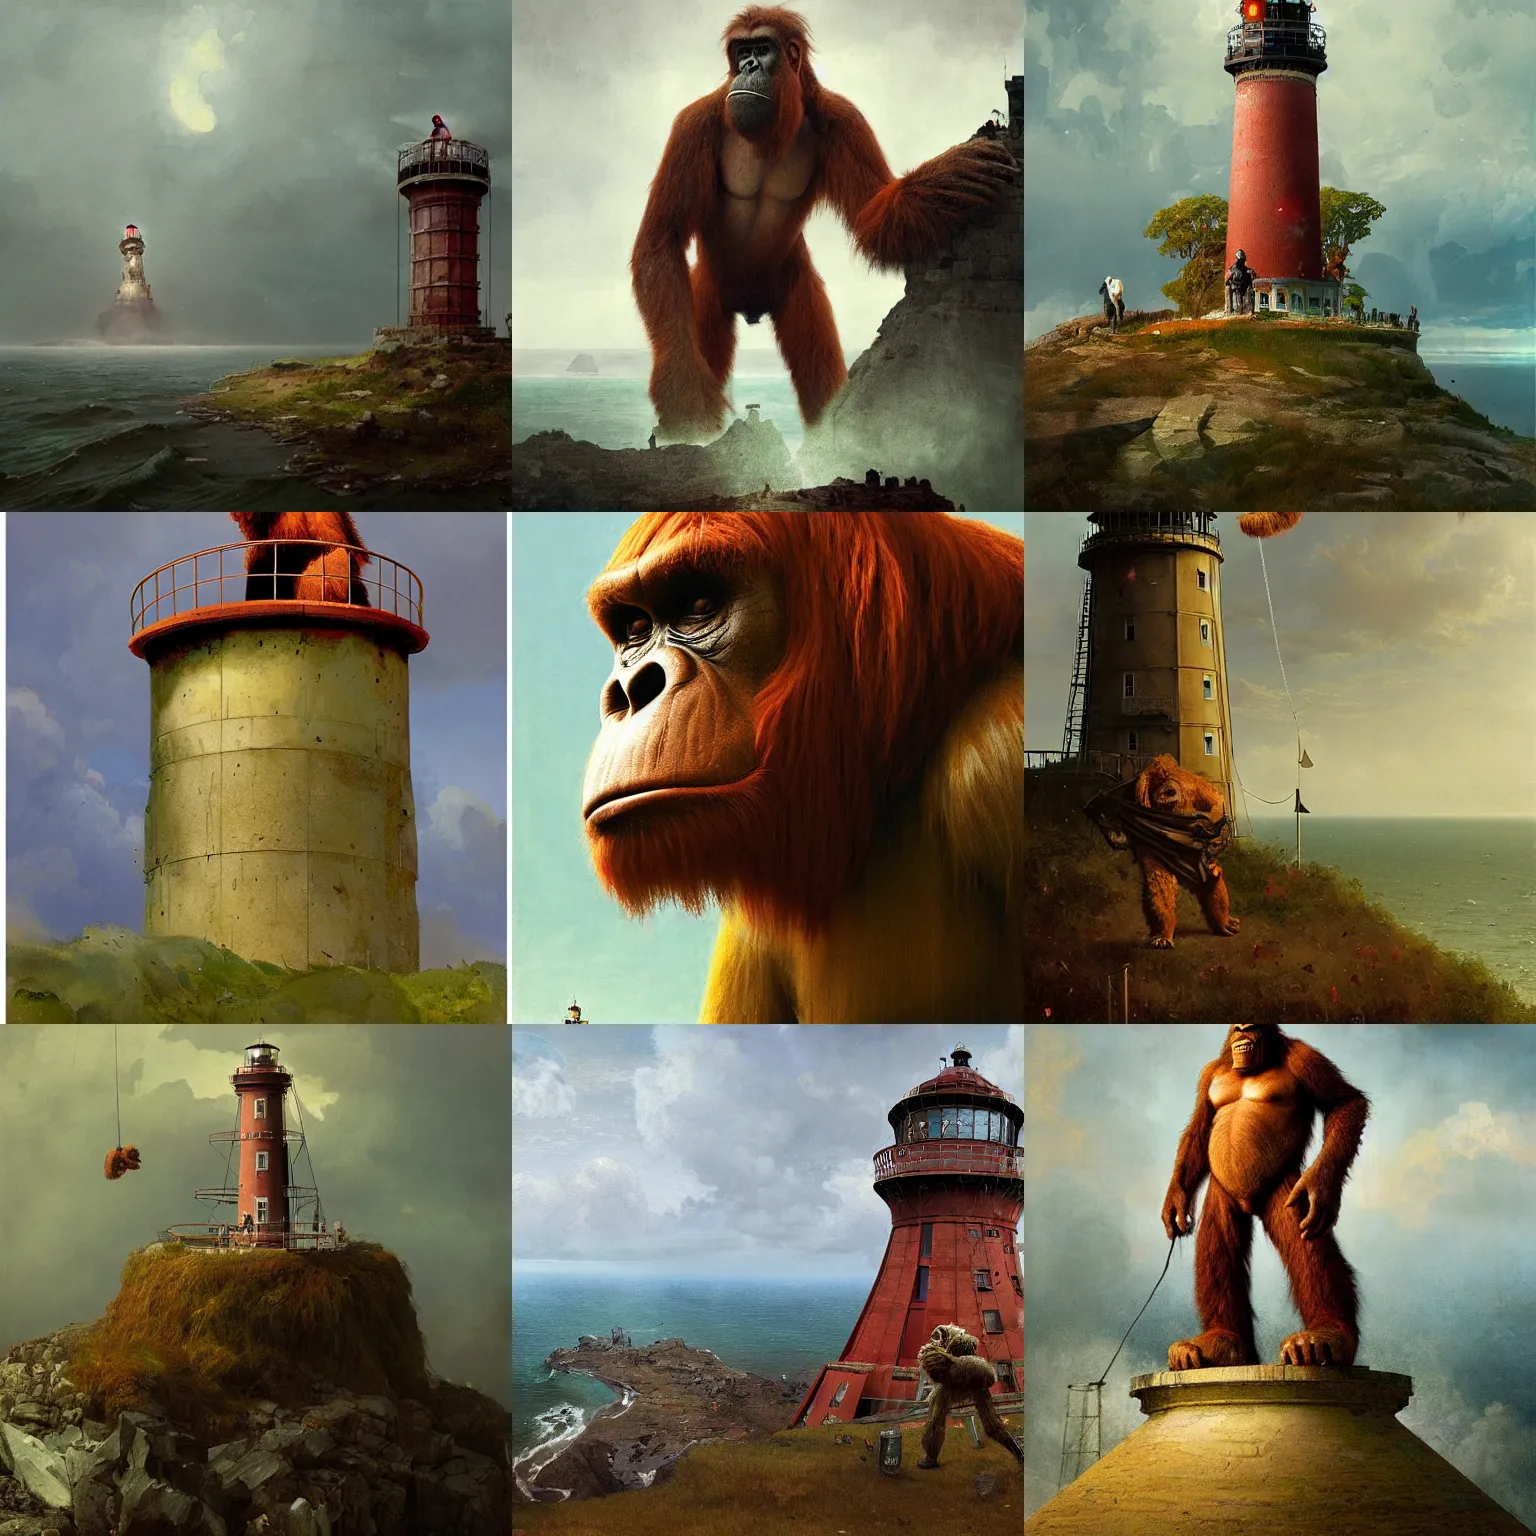 Prompt: far away portrait of a giant red orangutan as king kong on top of a lighthouse, photo realistic, highly detailed, perfect face, fine details, by carl spitzweg, ismail inceoglu, vdragan bibin, hans thoma, greg rutkowski, alexandros pyromallis